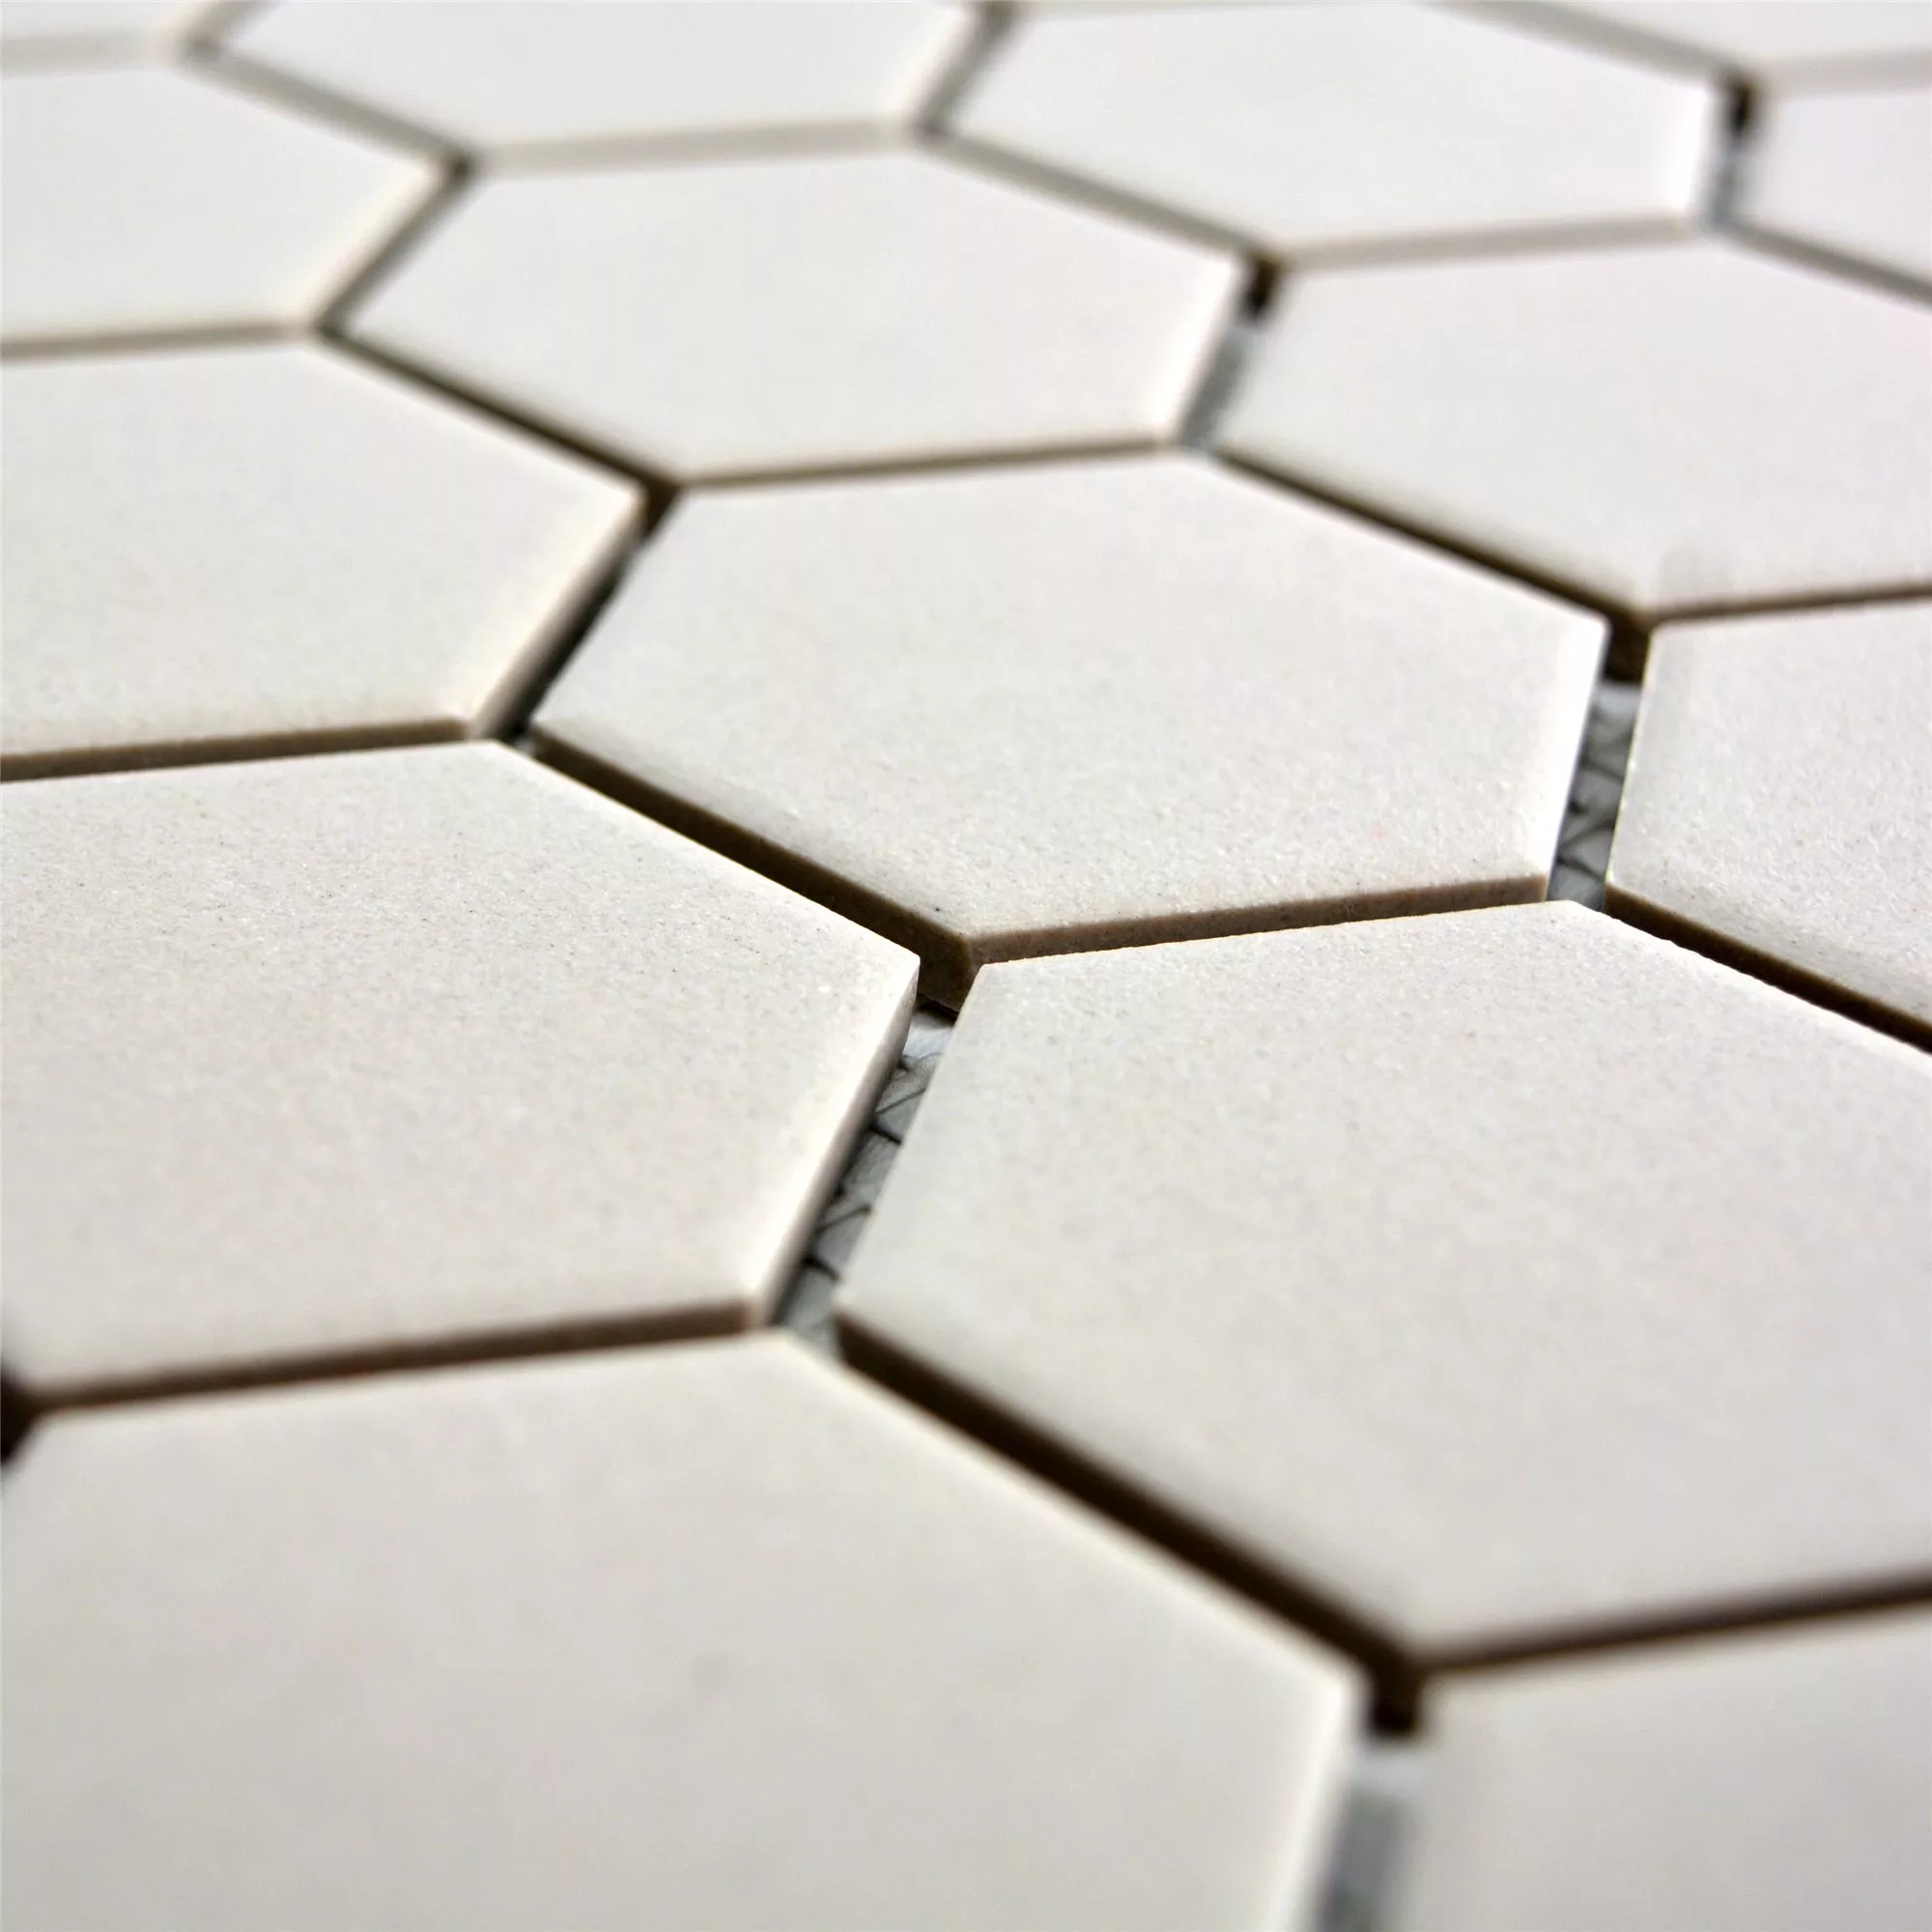 Ceramic Mosaic Tiles Begomil Unglazed Light Grey